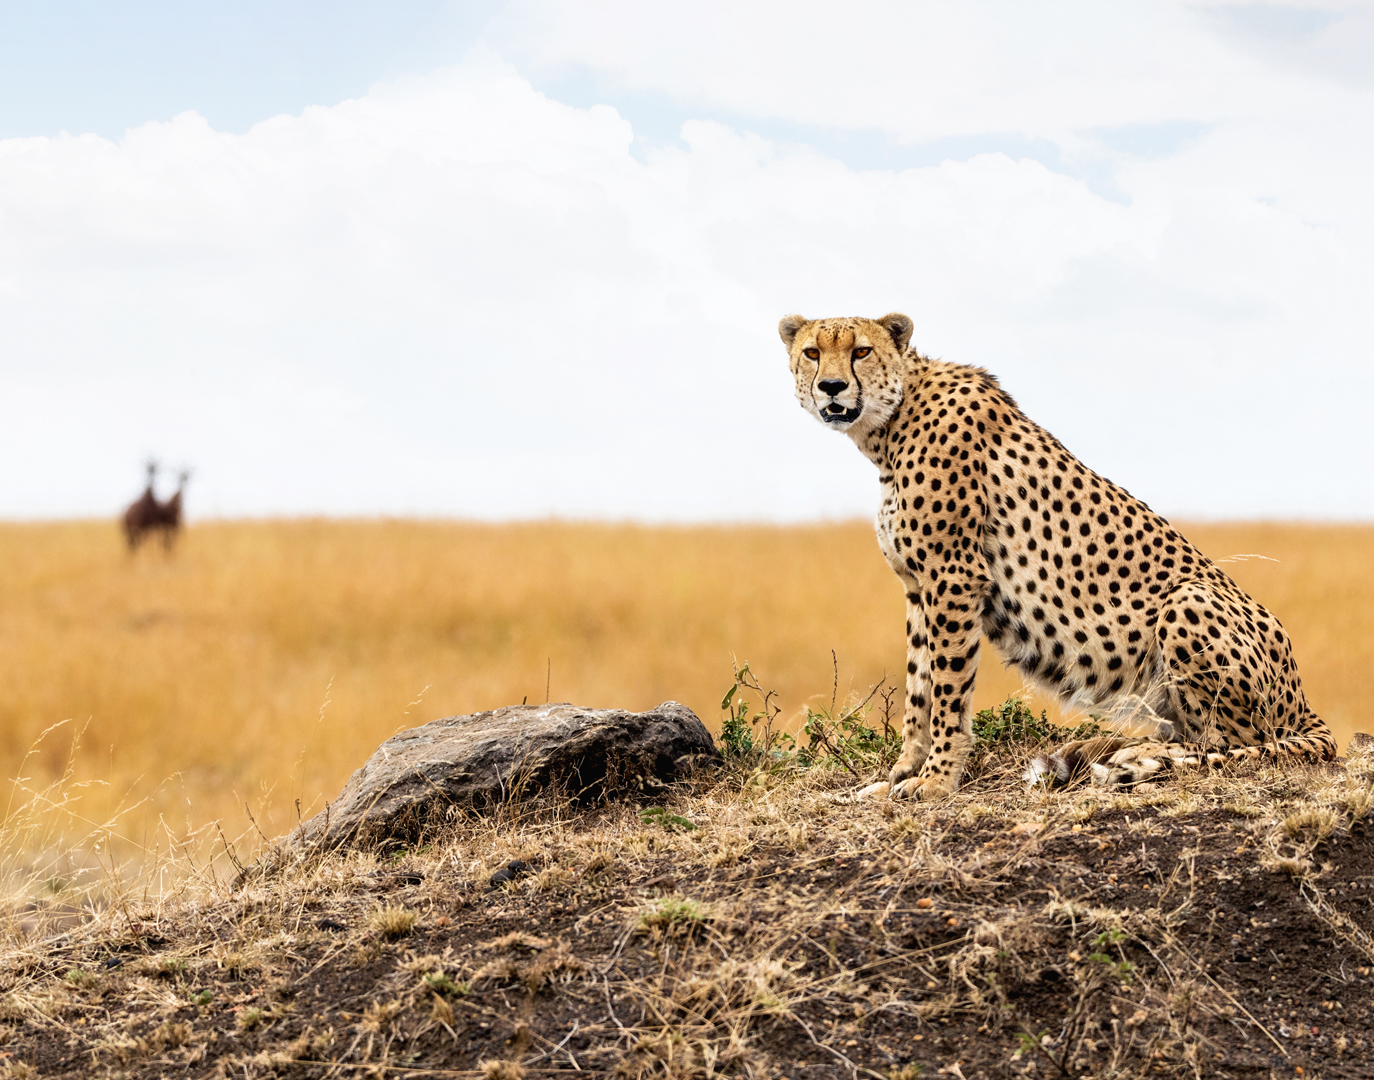 Cheetah in Africa Looking Into Camera.jpg